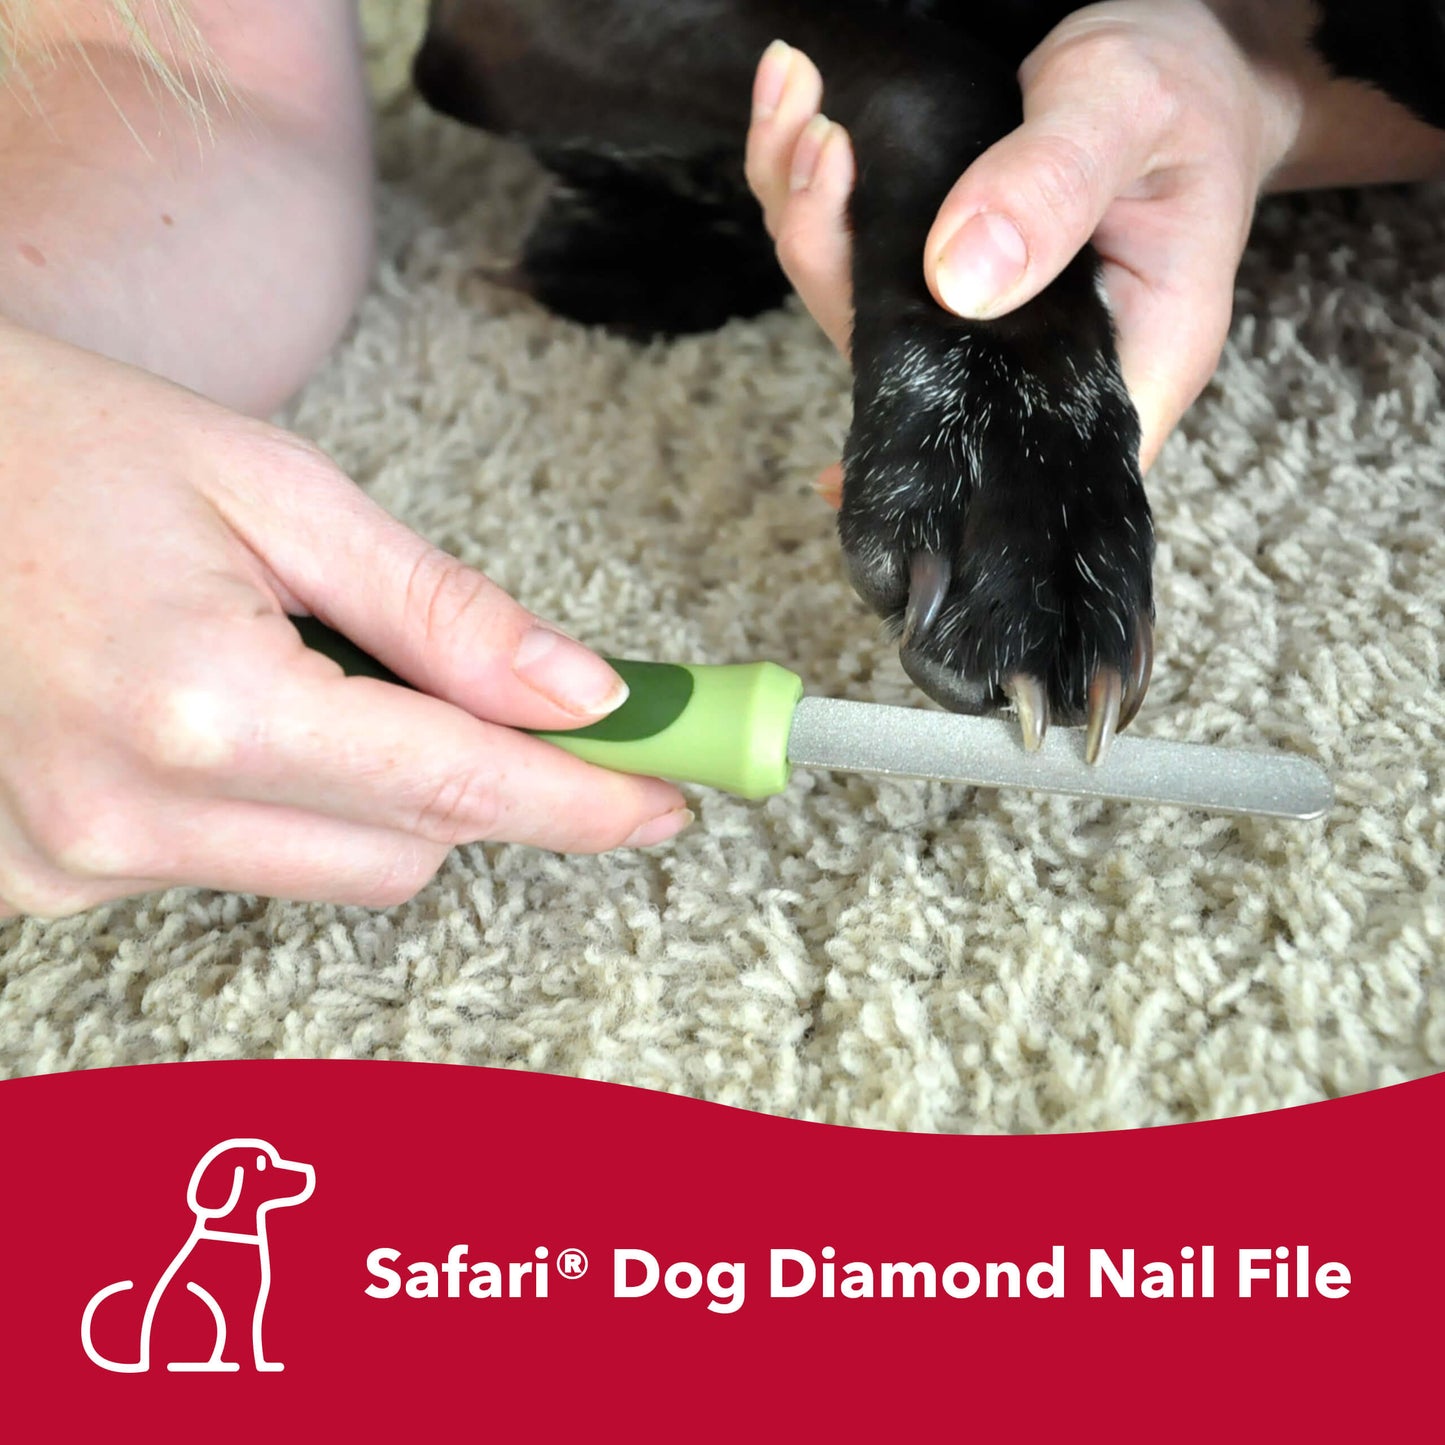 Safari Dog Diamond Nail File